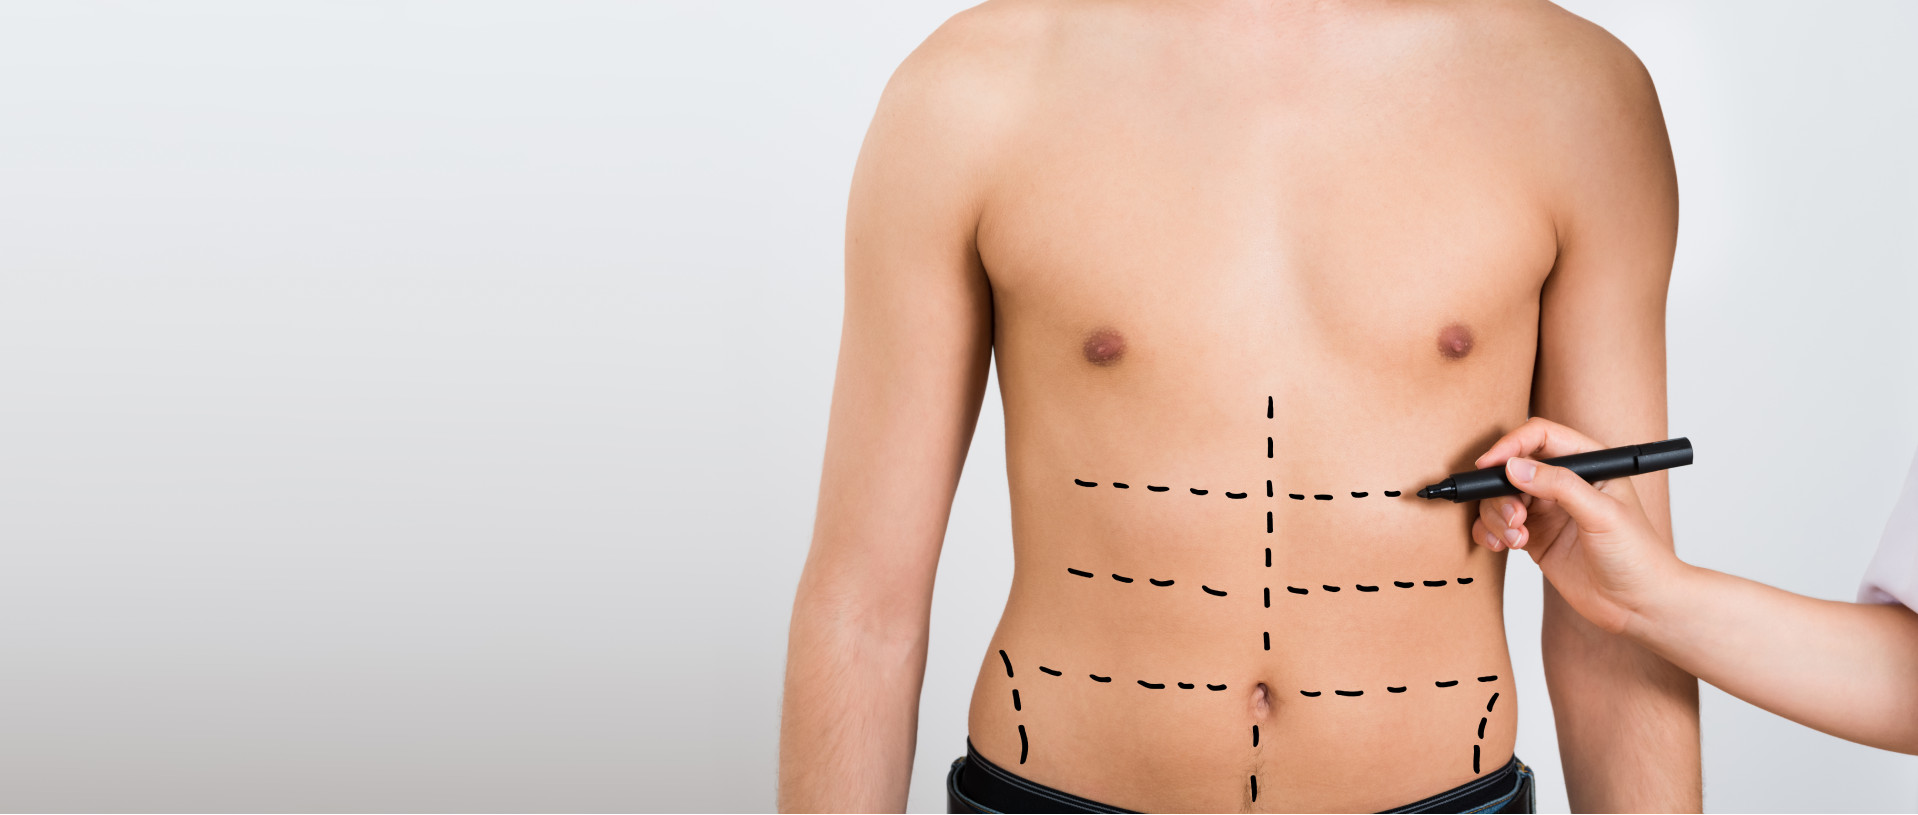 belly lipo | abdominal liposuction surgery